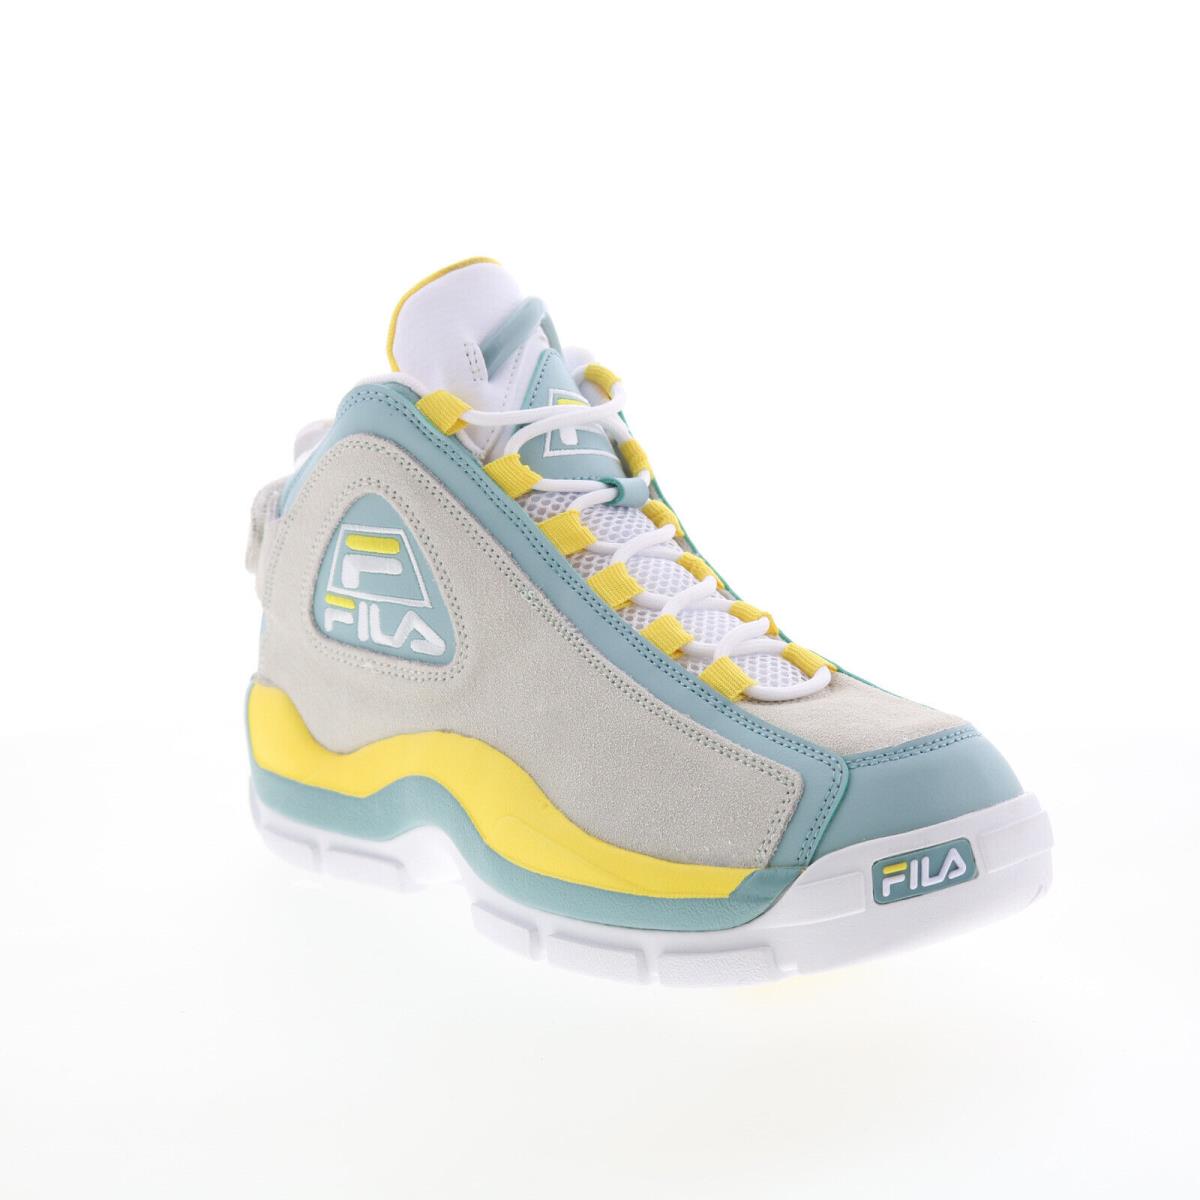 Fila Grant Hill 2 1BM01881-101 Mens Gray Athletic Basketball Shoes